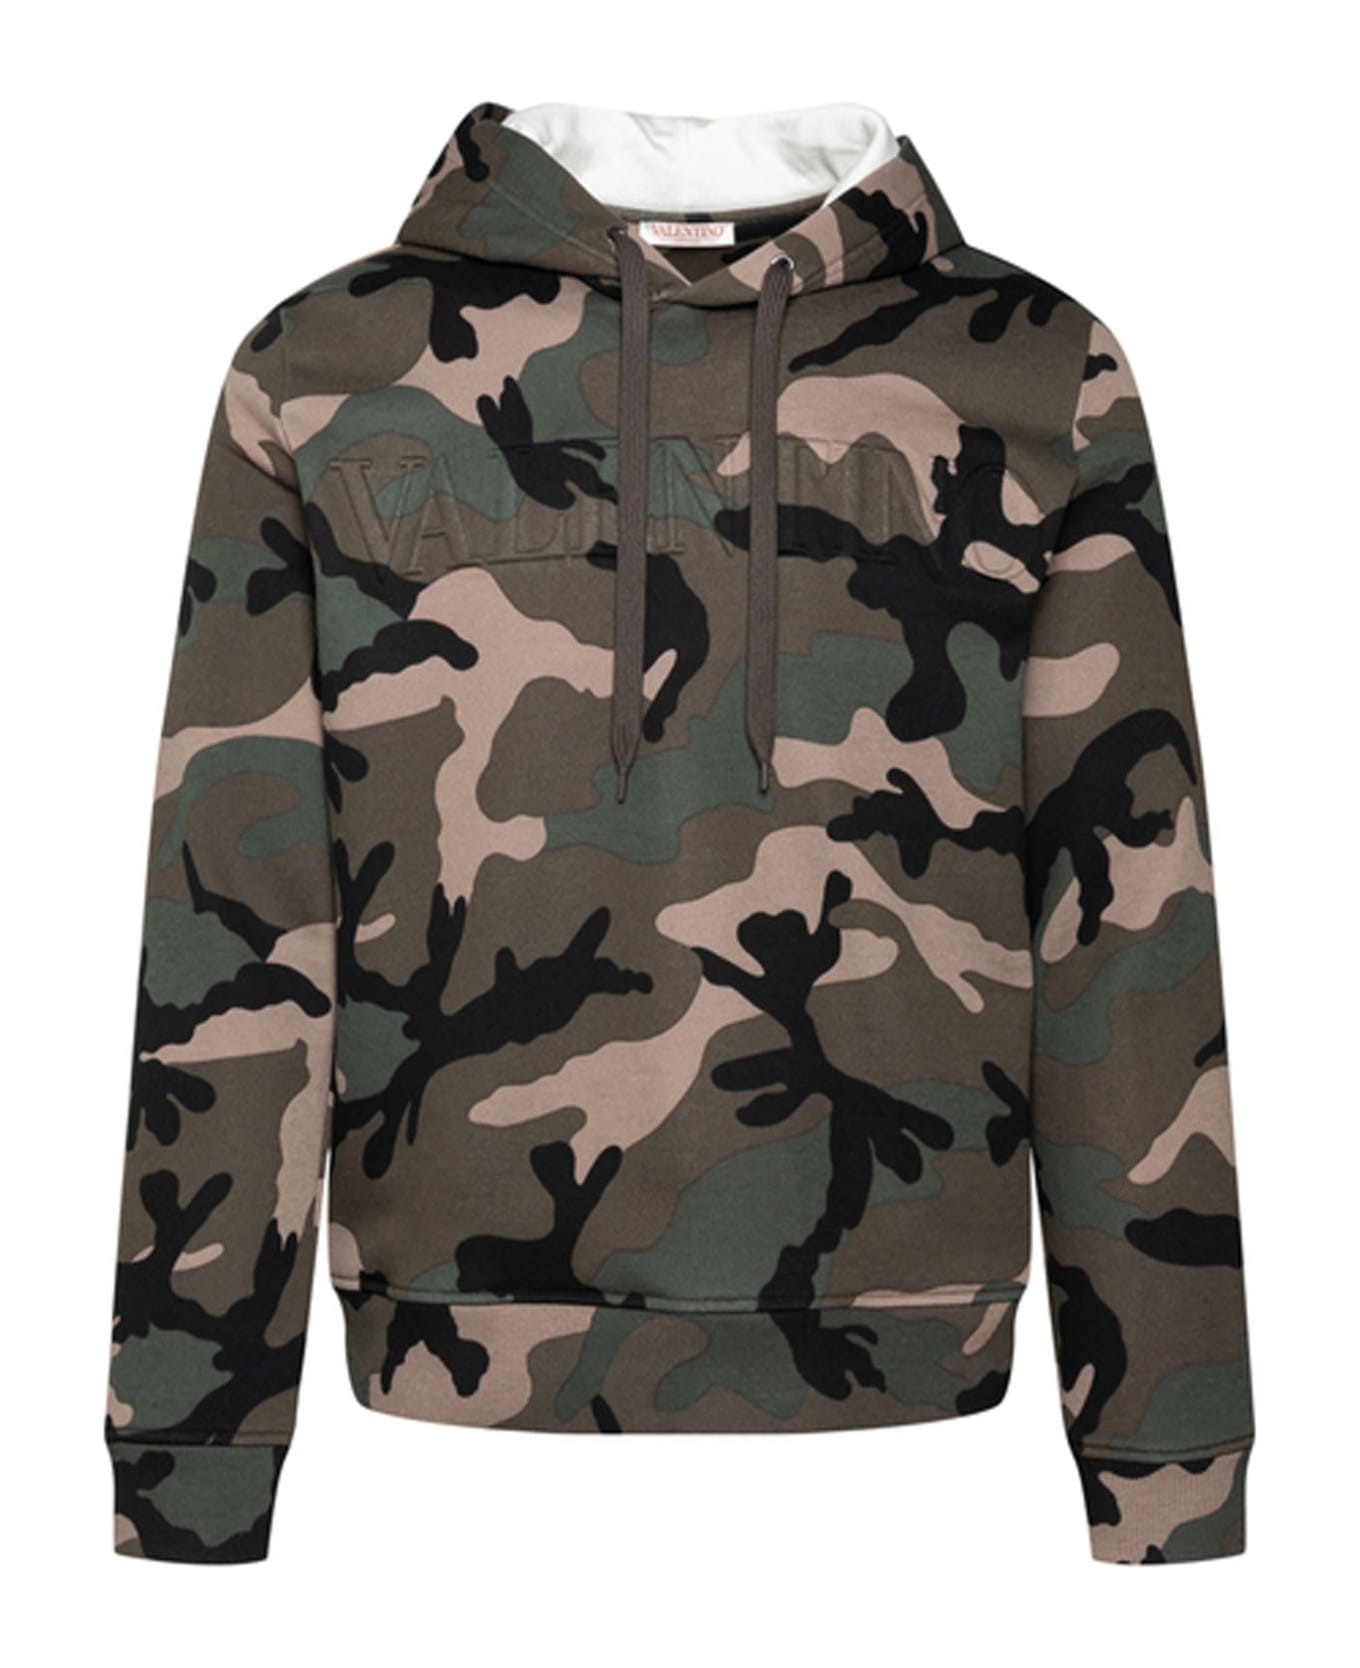 Valentino Camouflage Pattern Hoodie Sweatshirt - Green